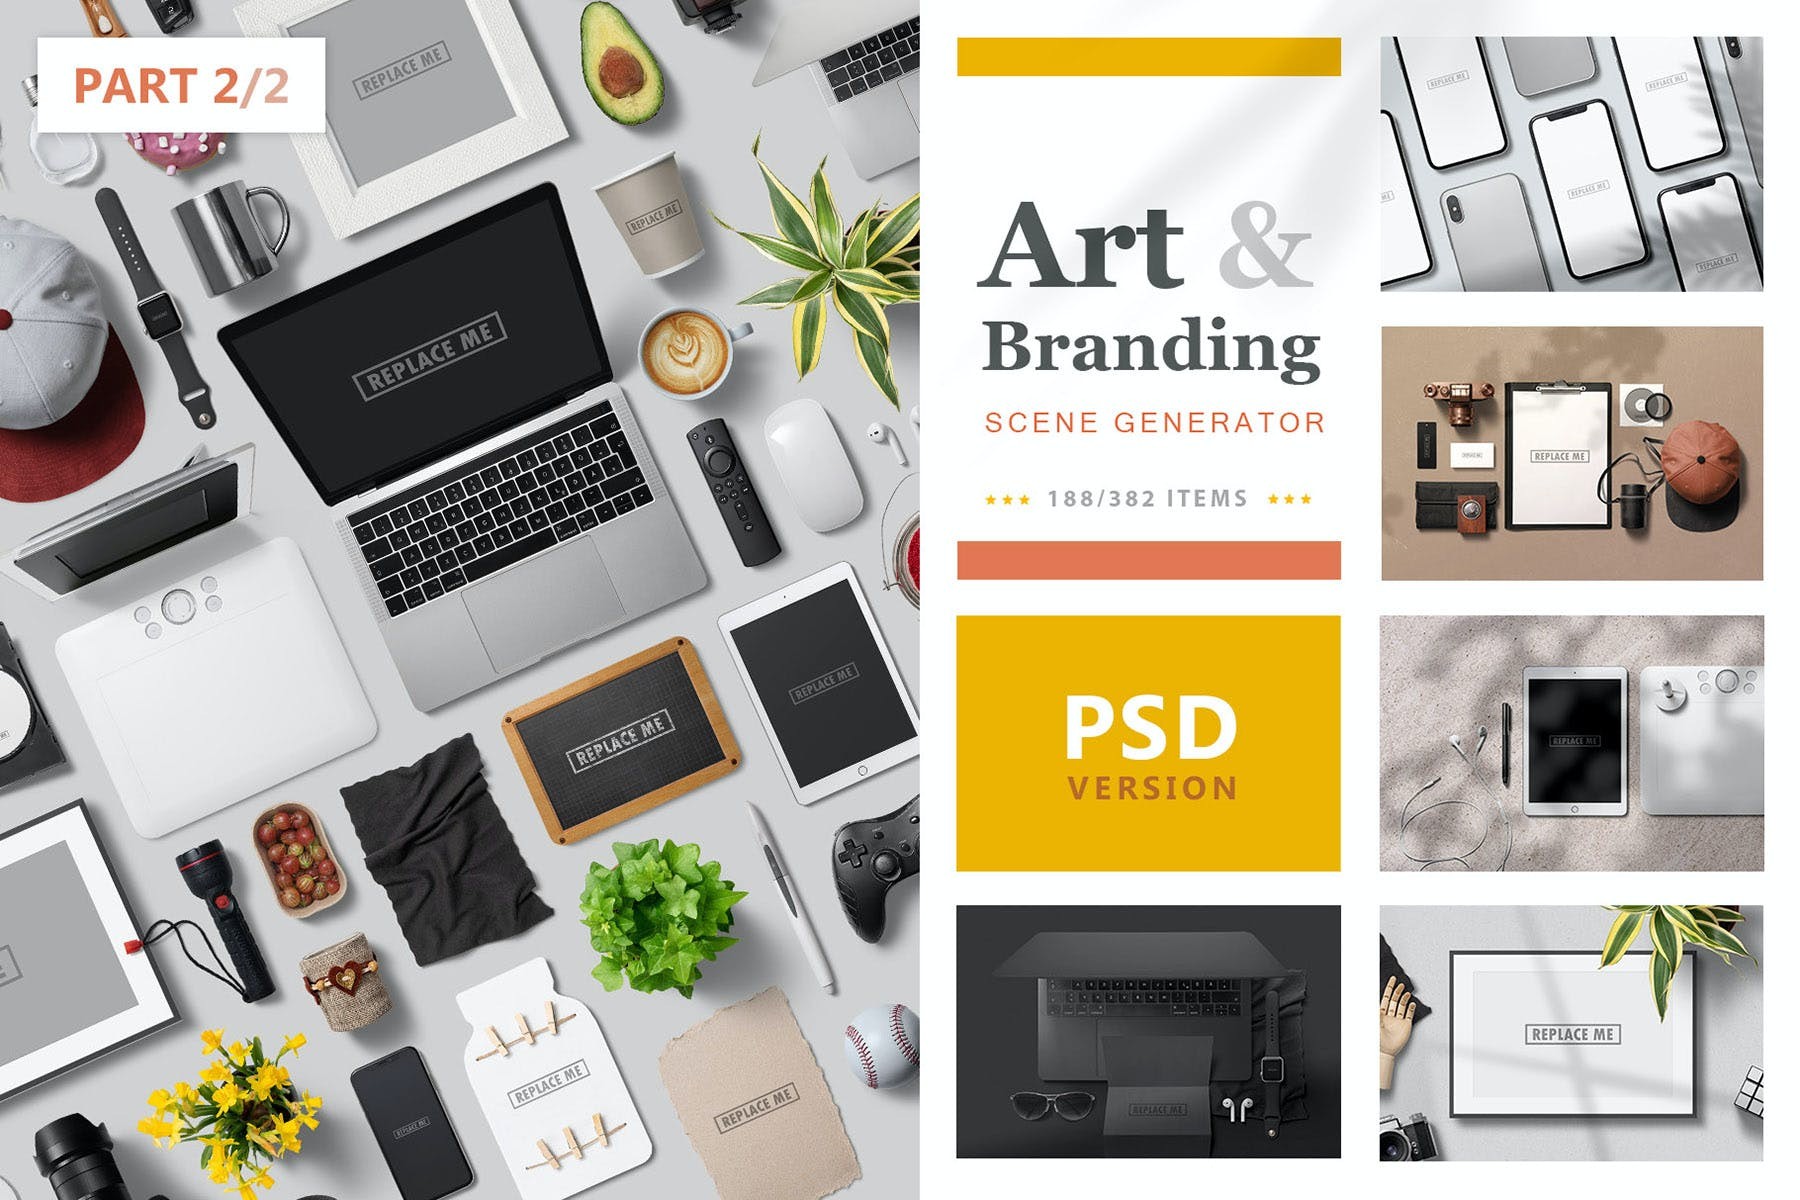 Art & Branding Scene Generator. Art of Branding. Envato elements. Https elements com